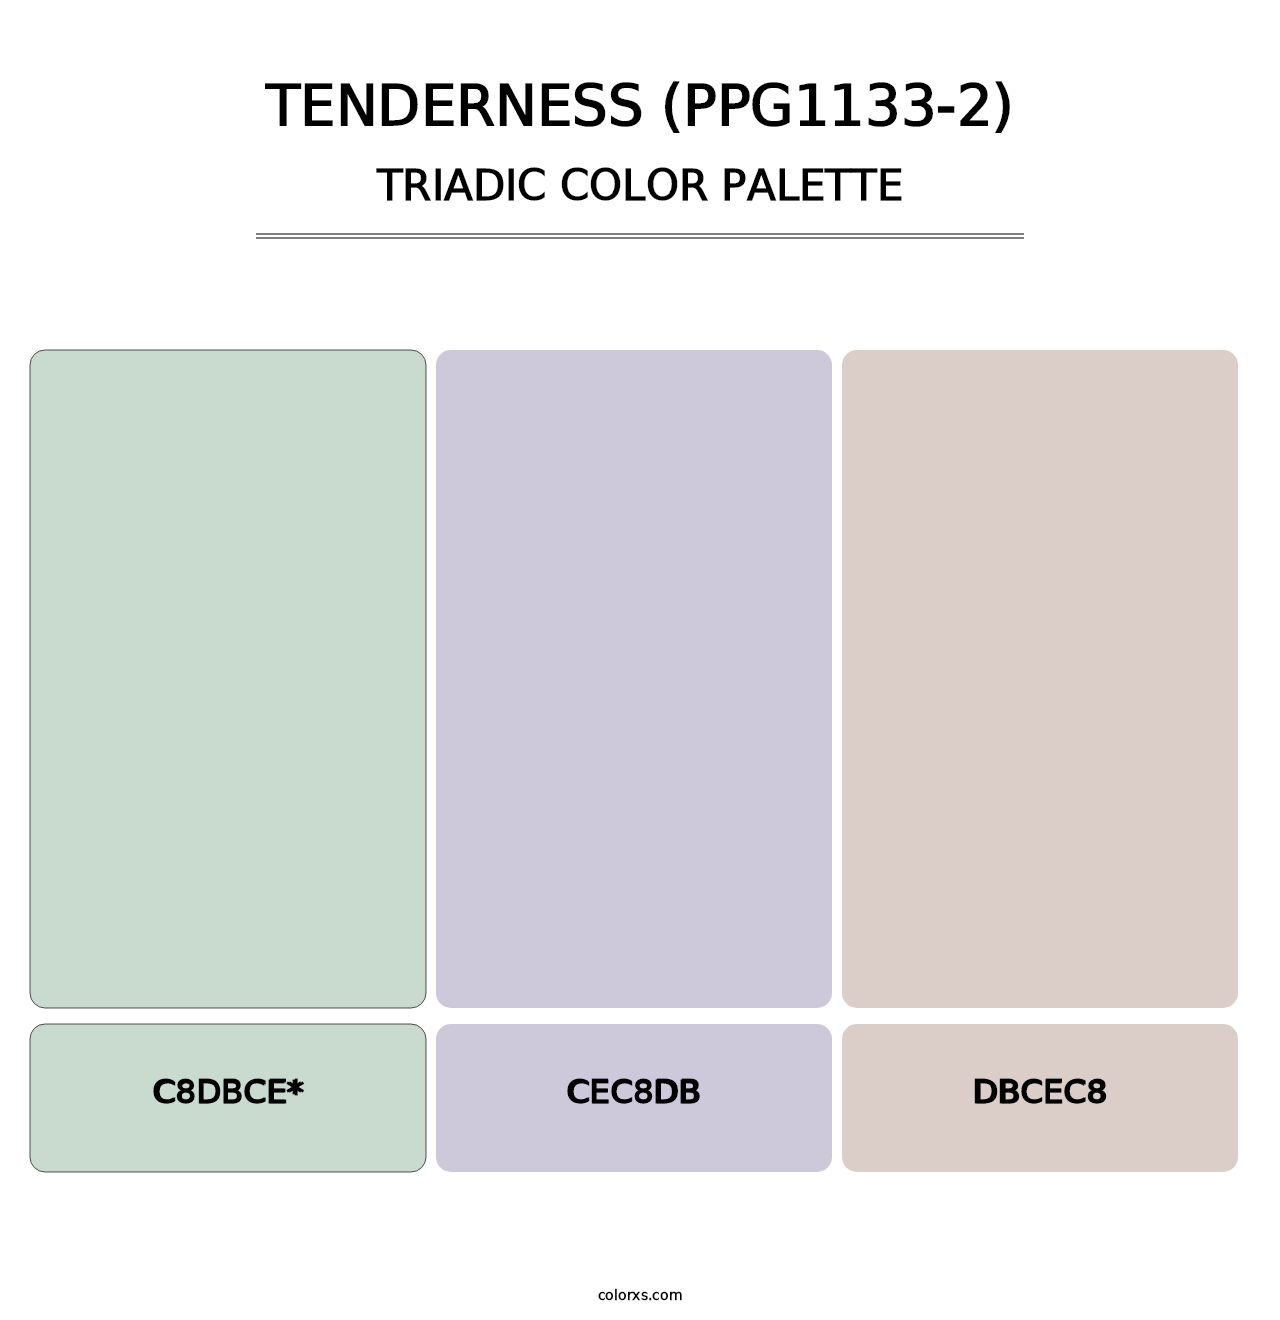 Tenderness (PPG1133-2) - Triadic Color Palette